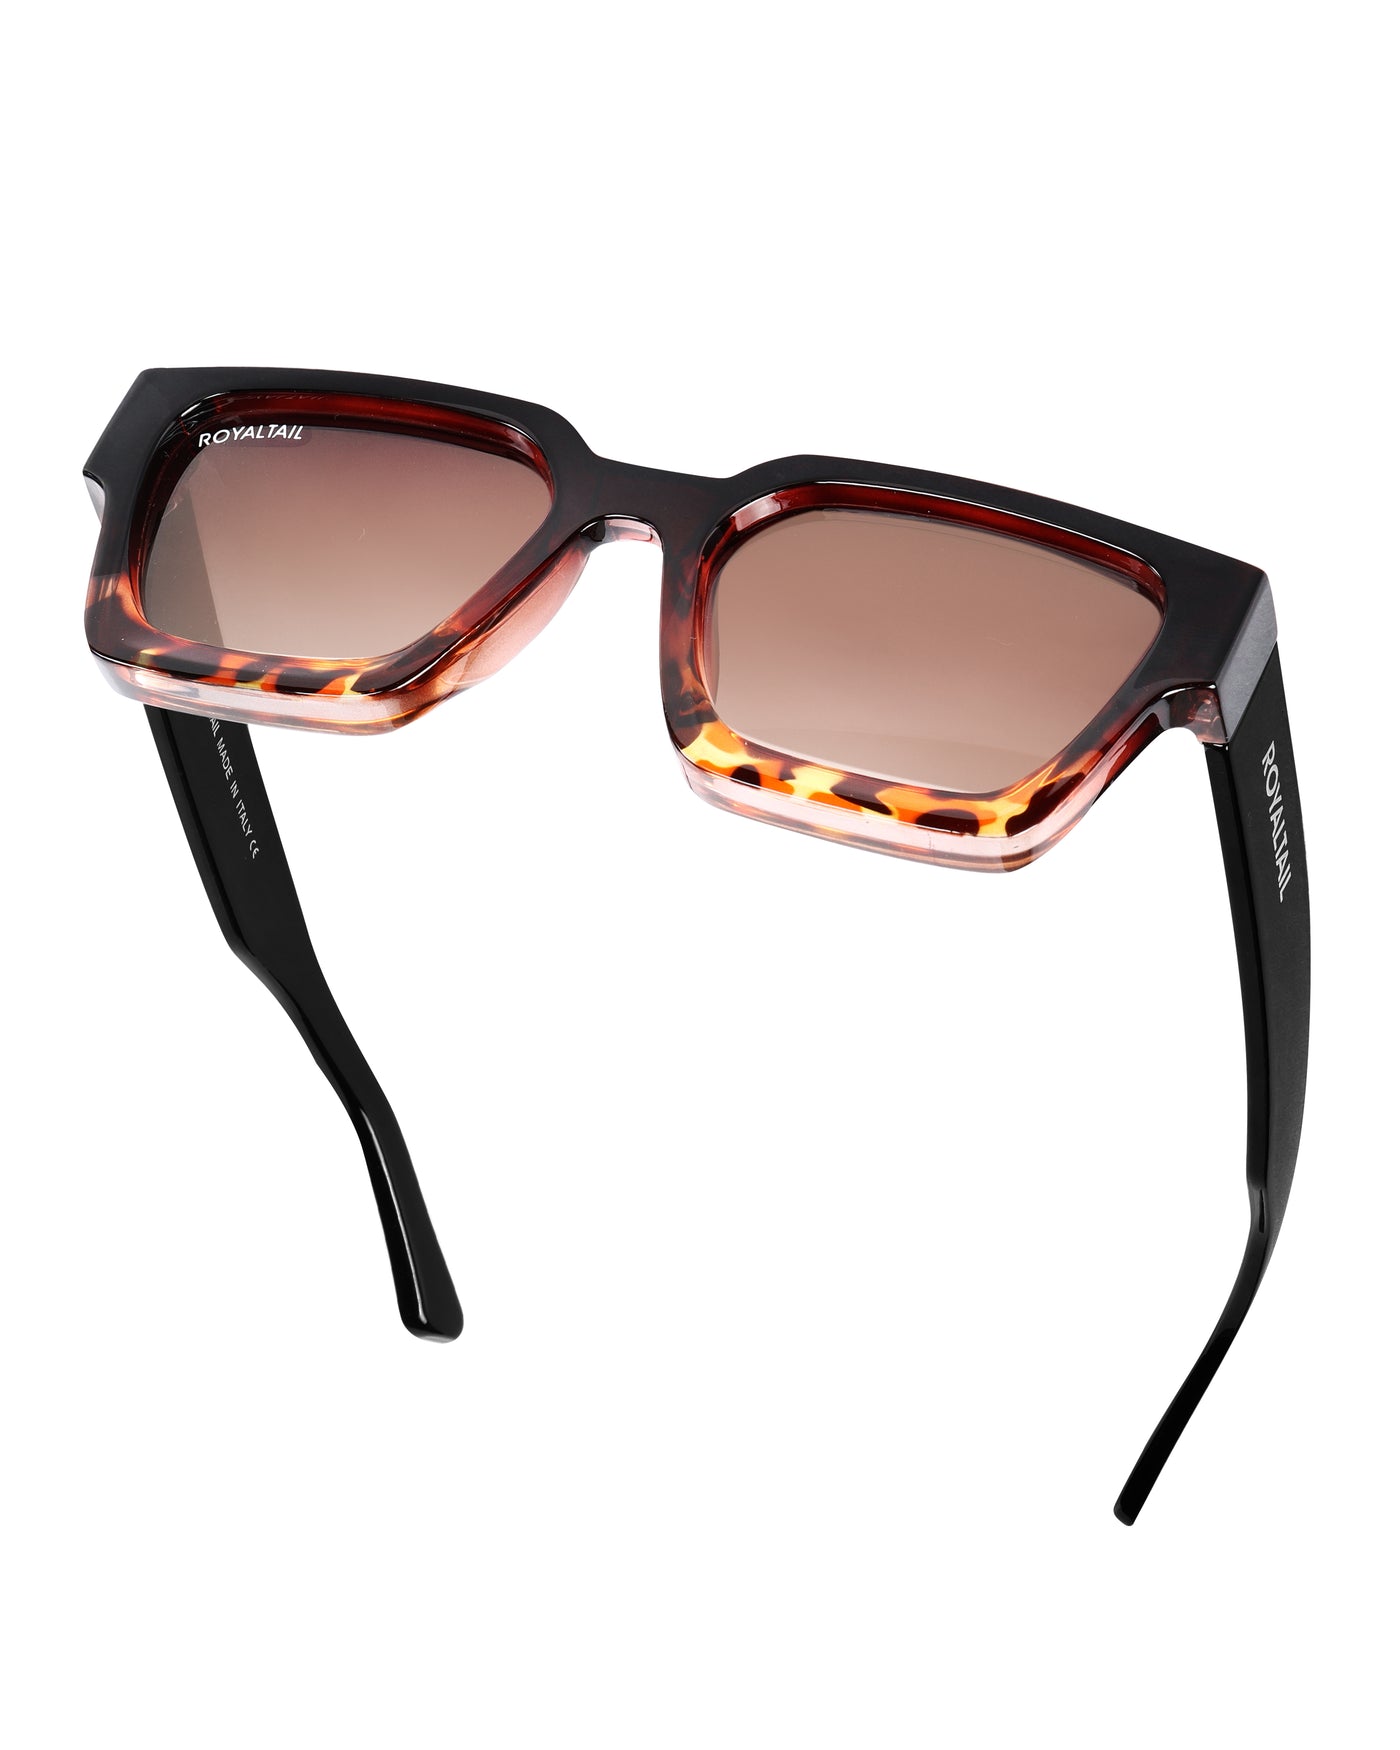 Tartaruga Unisex Classic Thick Square Brown UV Protected Sunglasses RT066